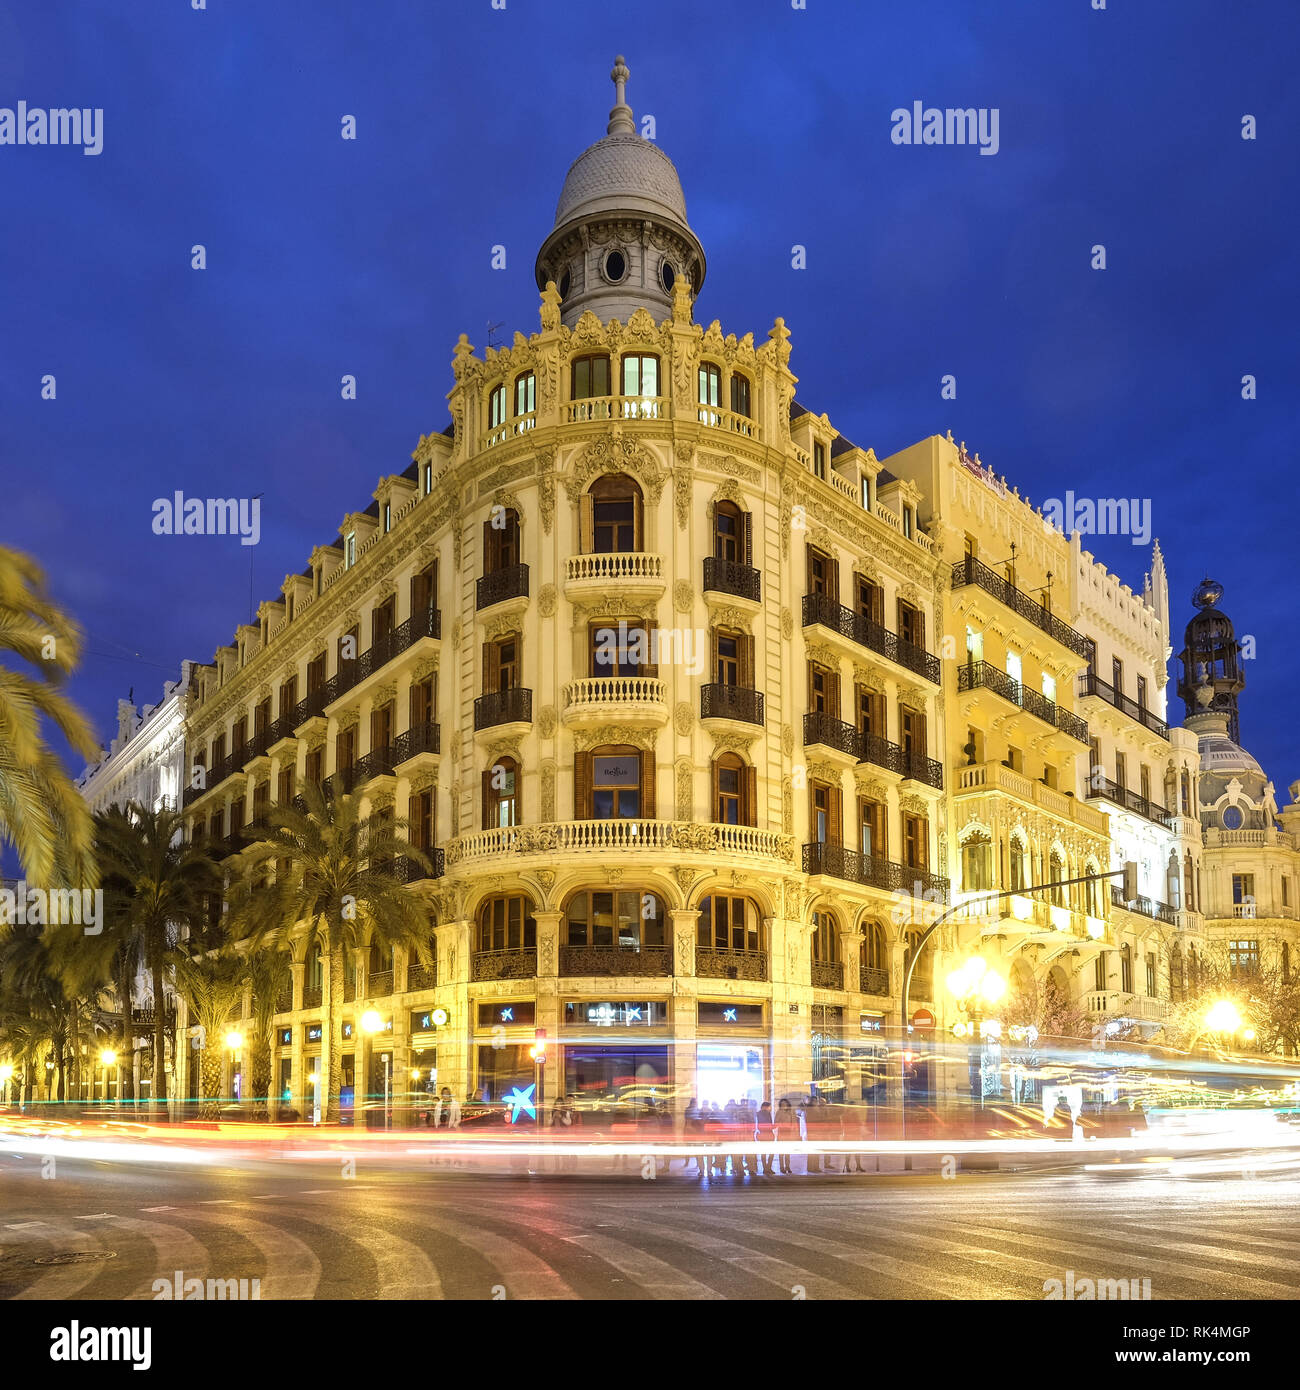 Valencia city lights at nighttime Stock Photo